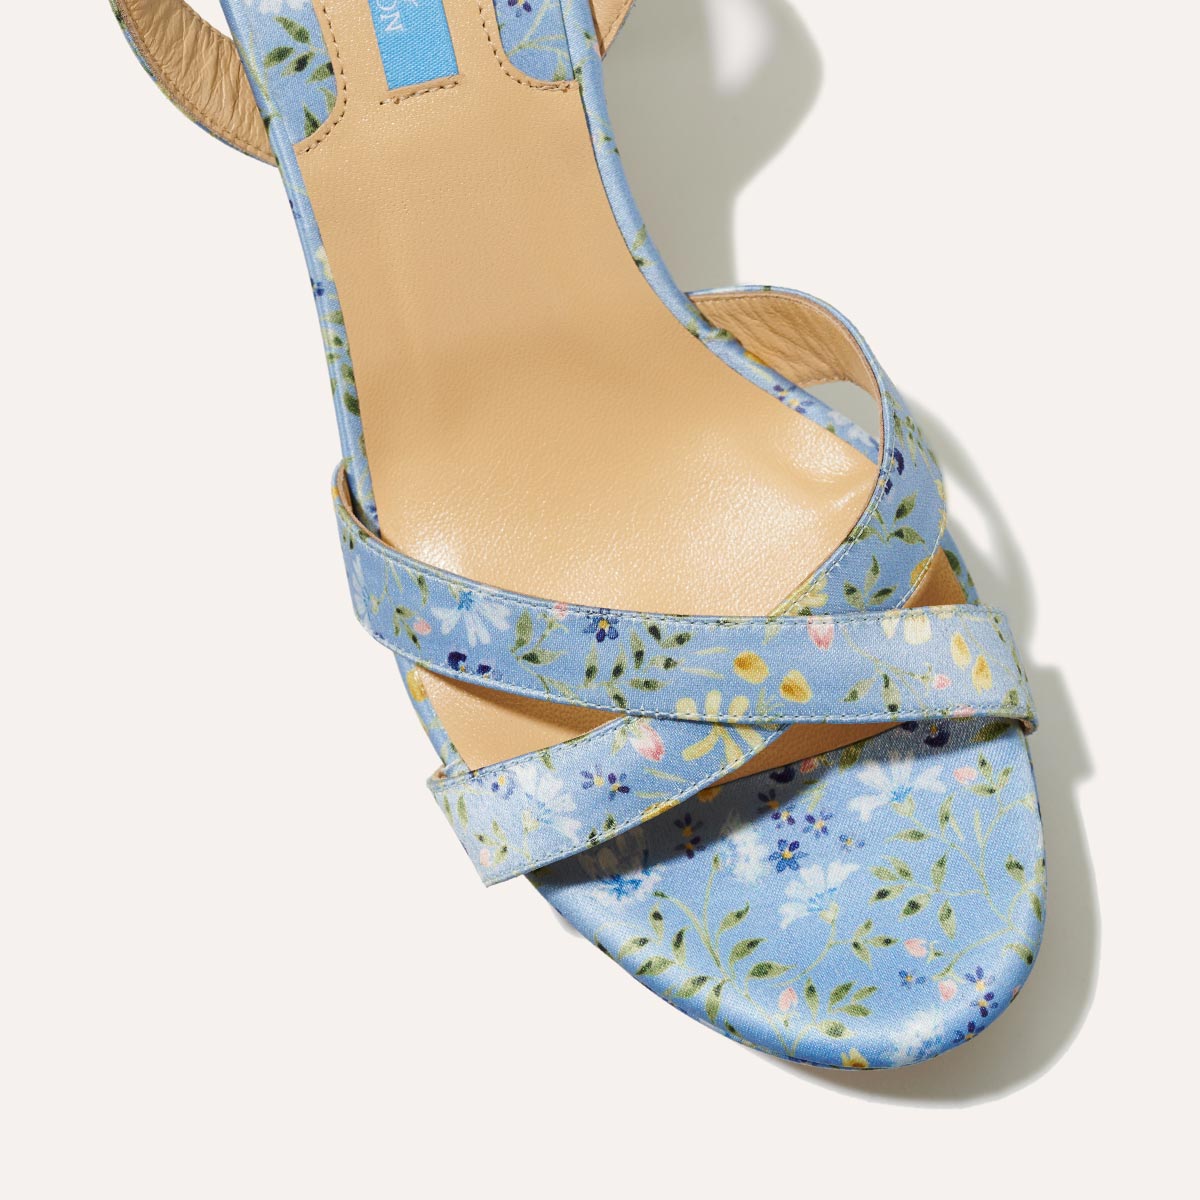 OTM Exclusive: The Platform Sandal in Riley Sheehey Blue Floral Satin